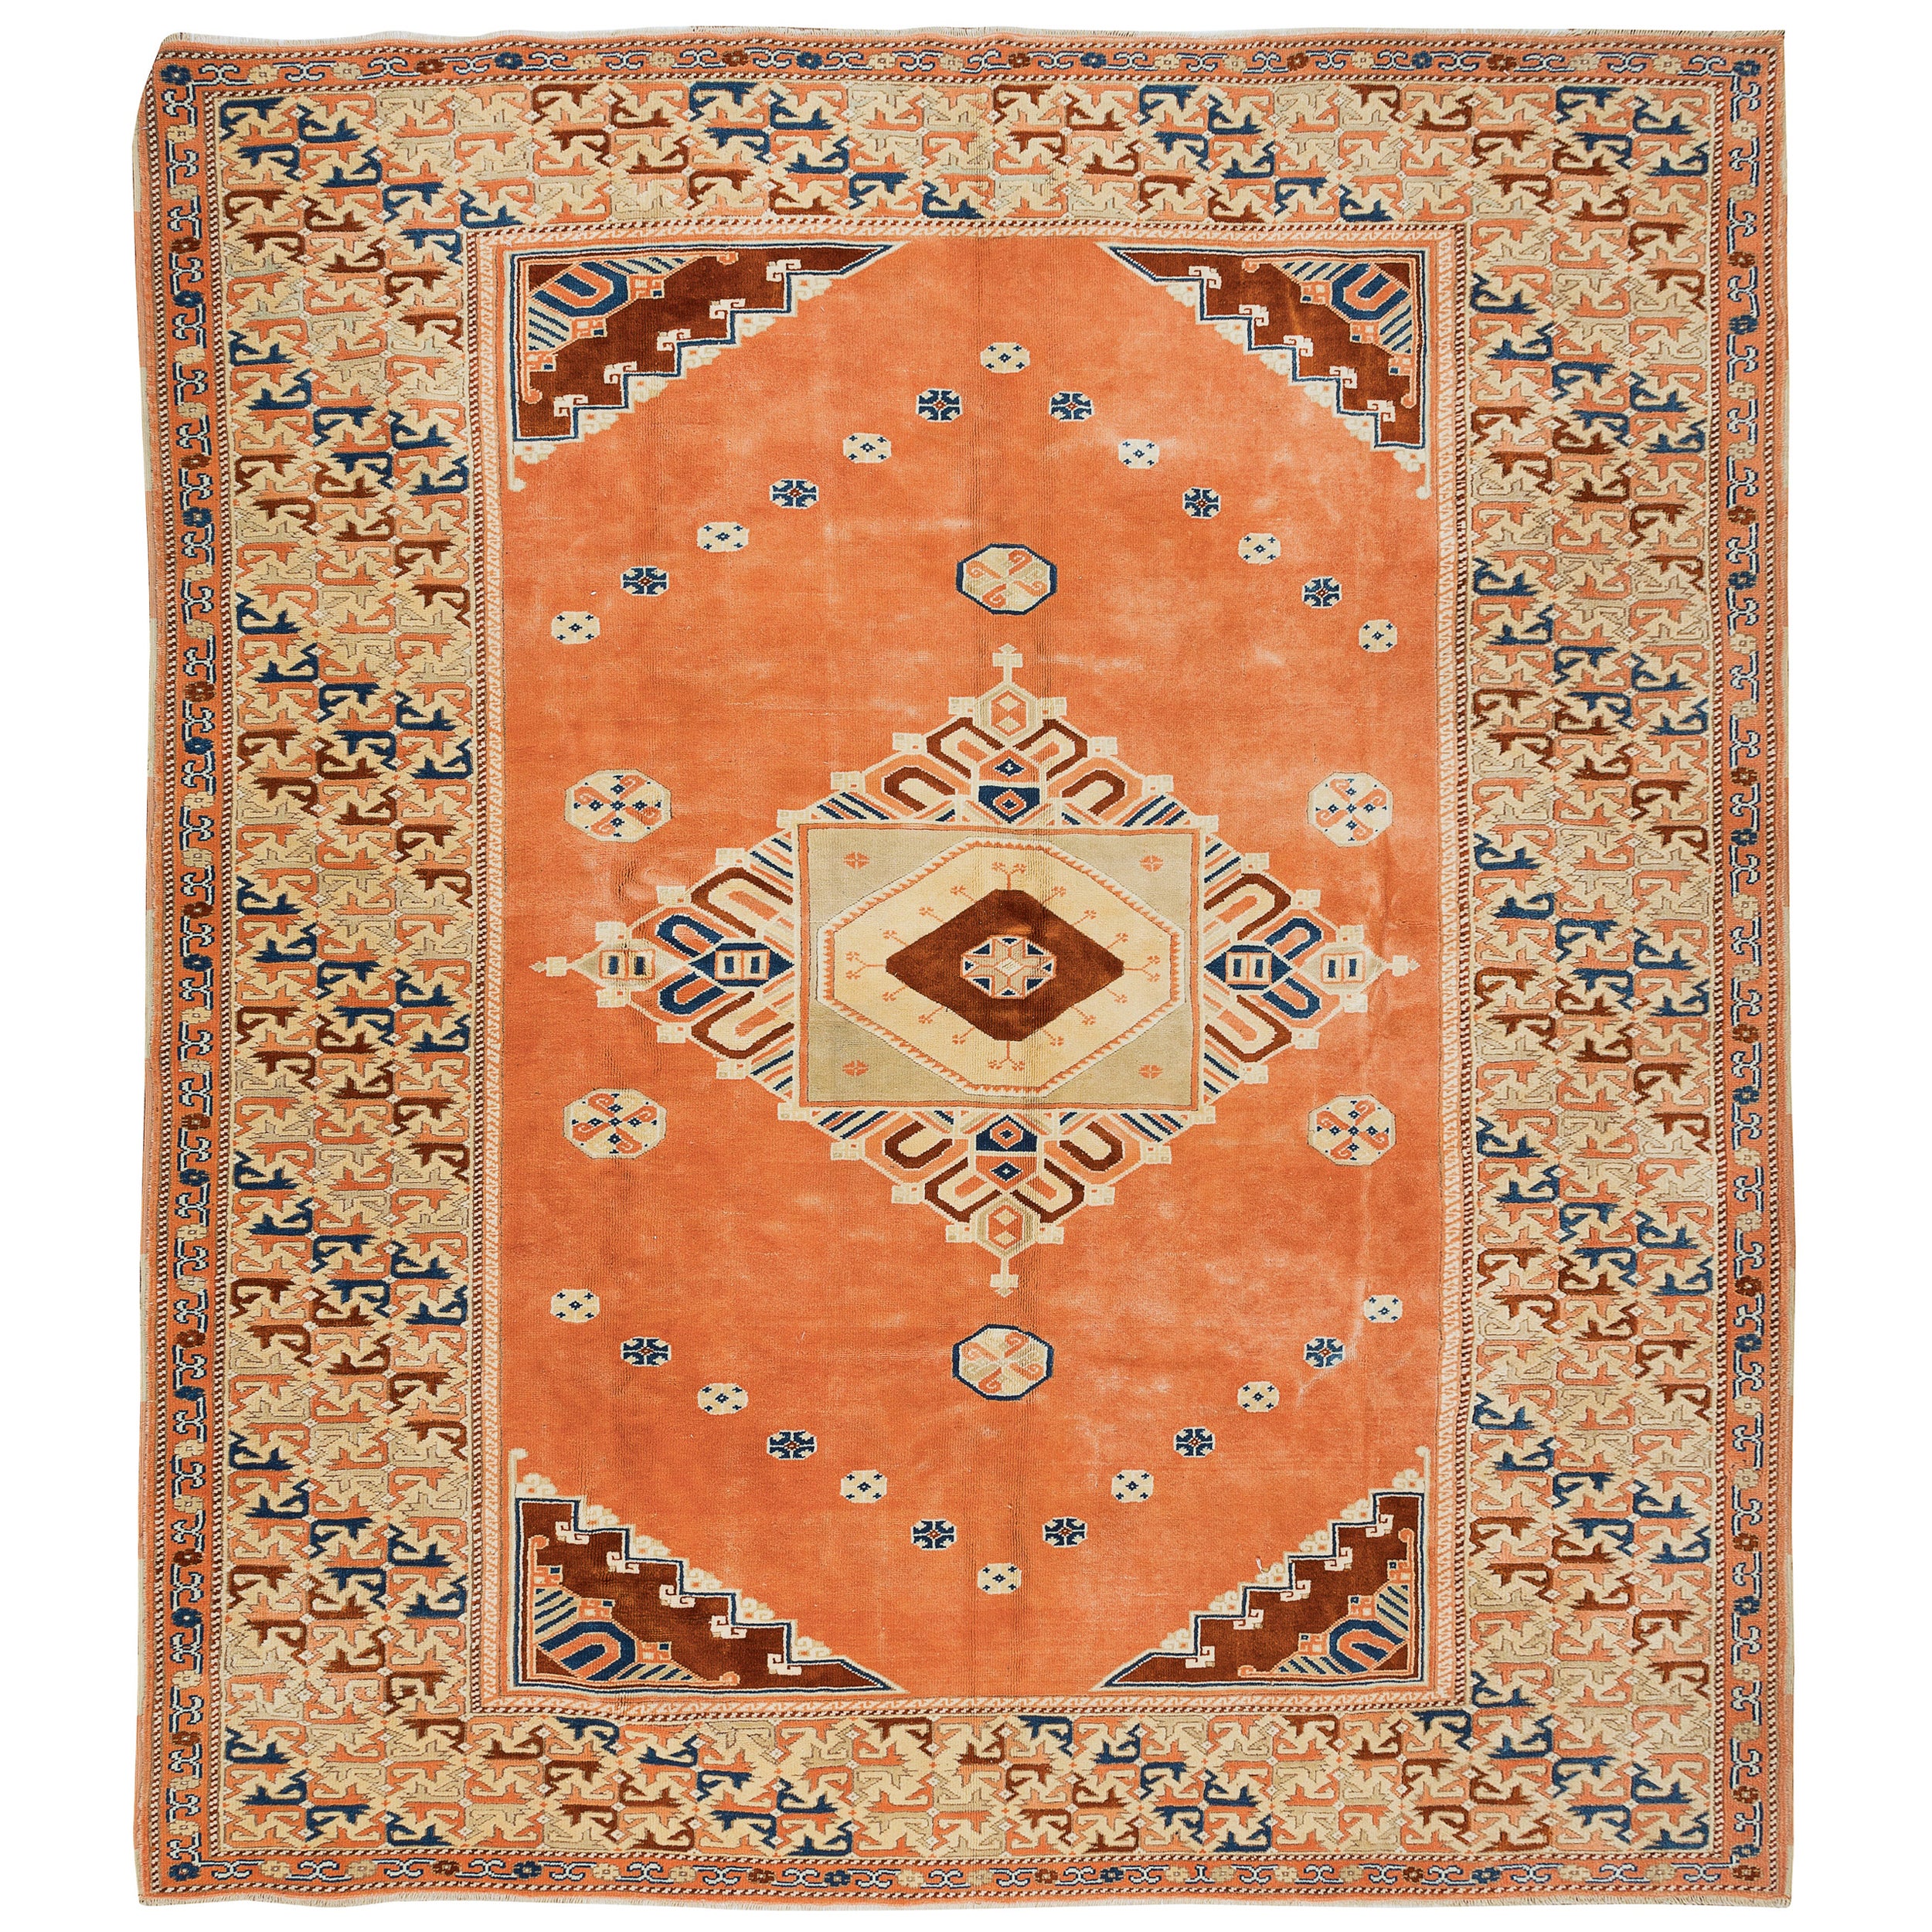 8.2x9.7 Ft Modern Unique Turkish Wool Area Rug, Handmade Carpet in Red Tones